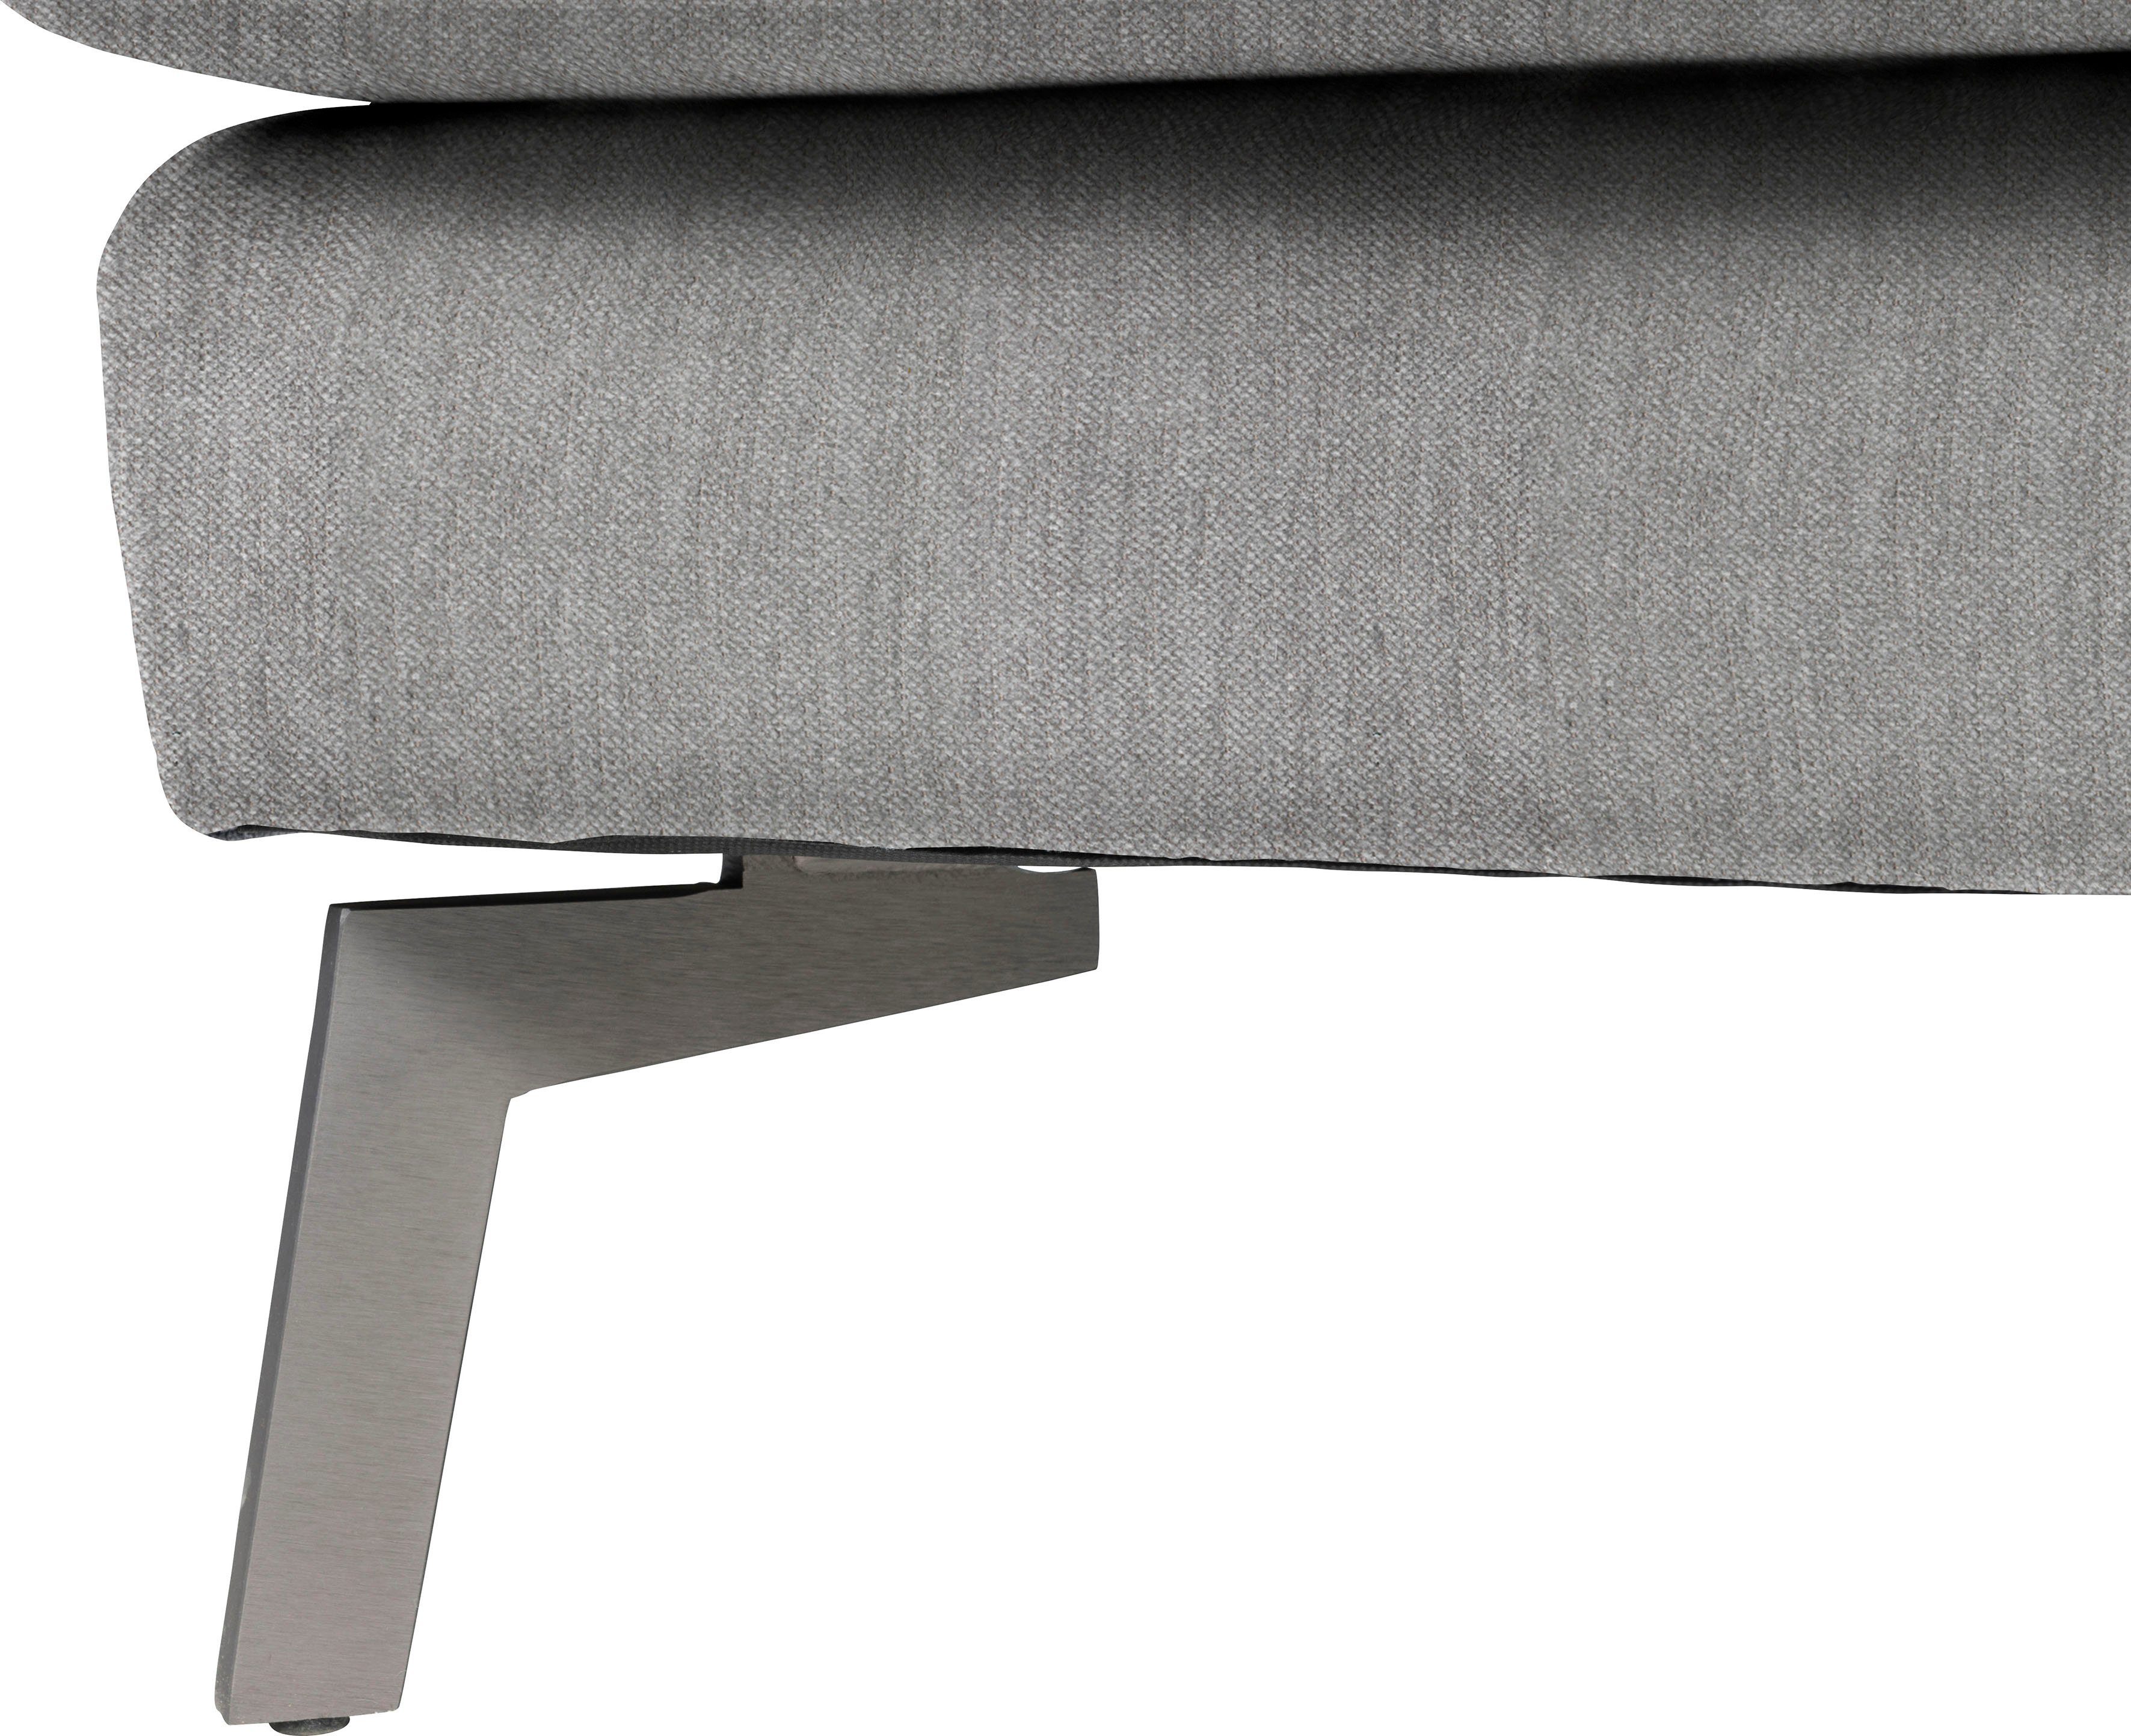 furninova Loungesessel Saga, skandinavischen Design light Klassiker ein im grey